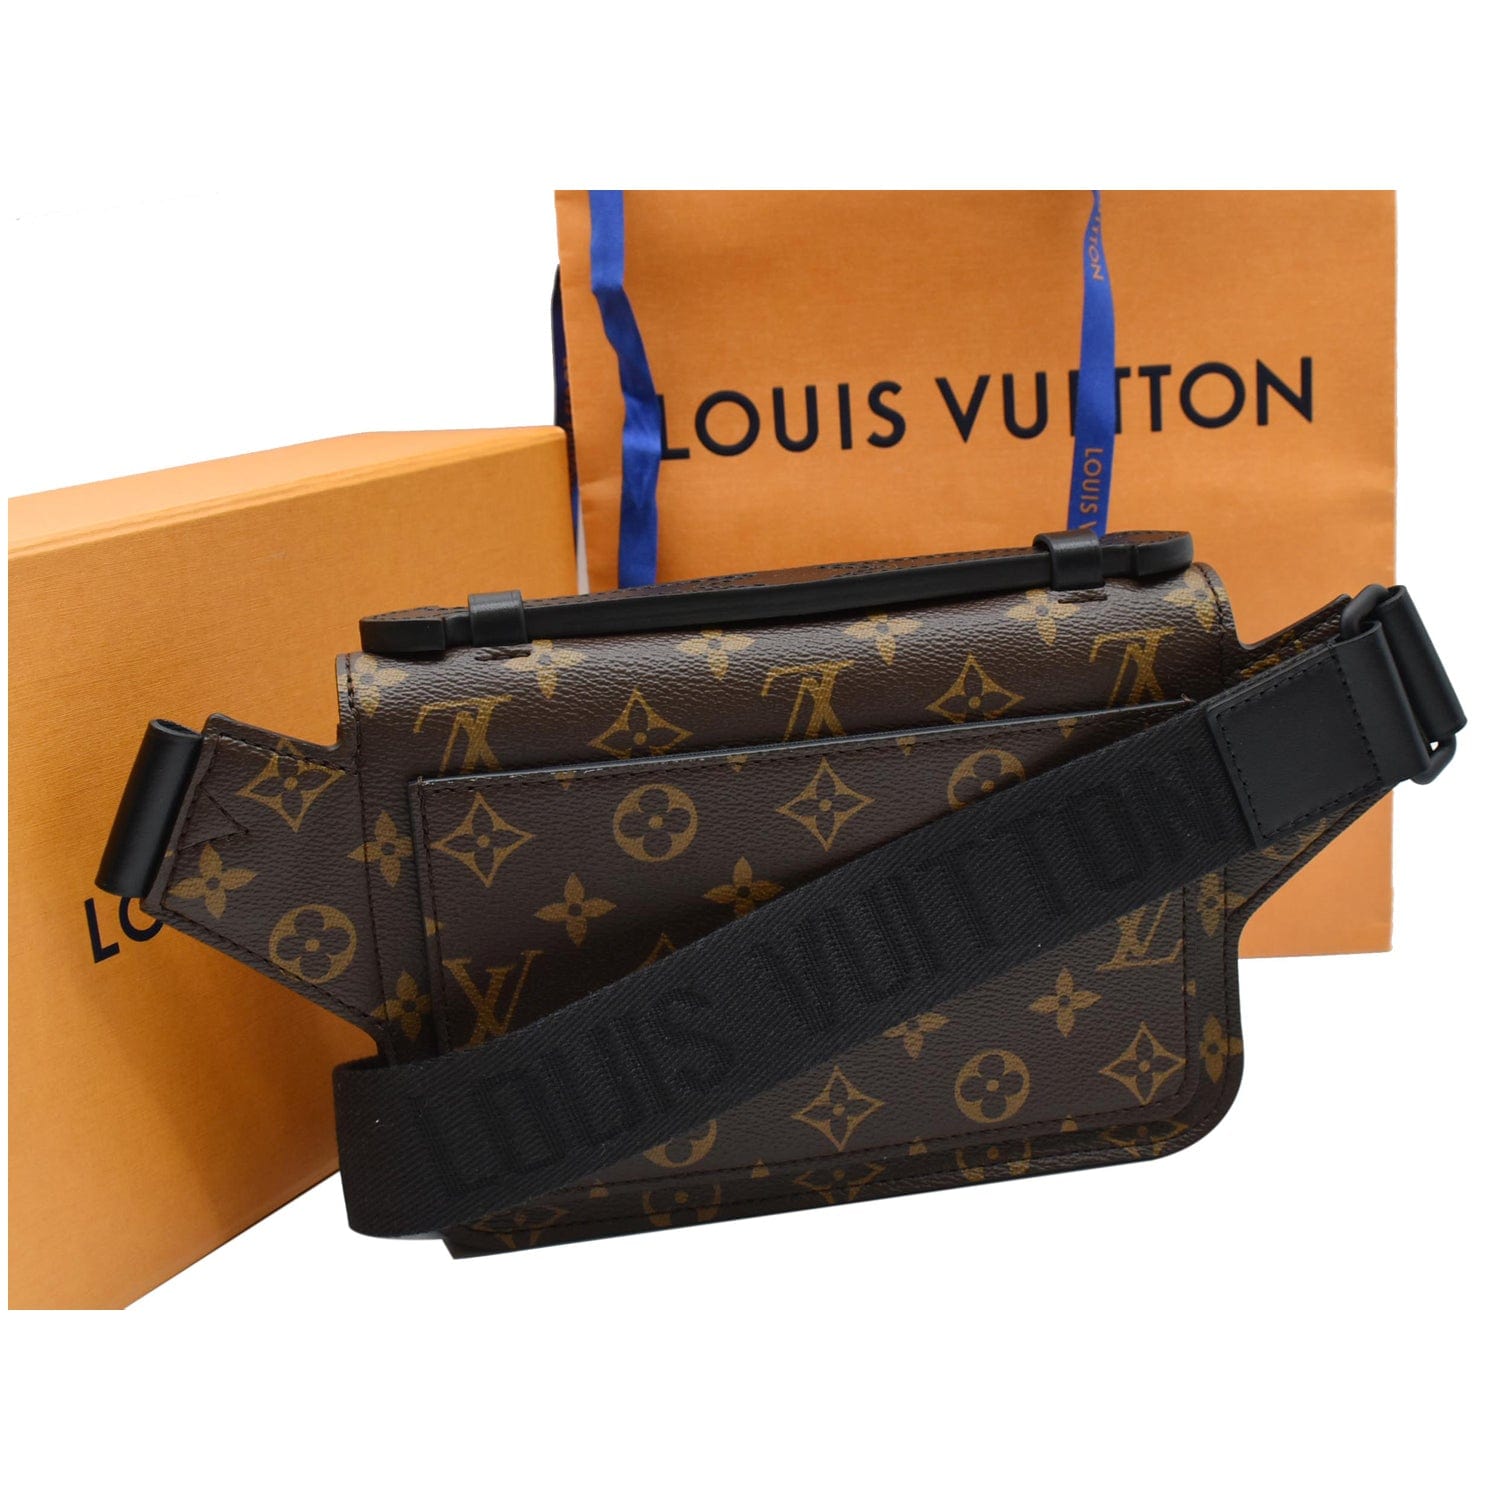 Bandouliere Monogram Leather Strap – Keeks Designer Handbags